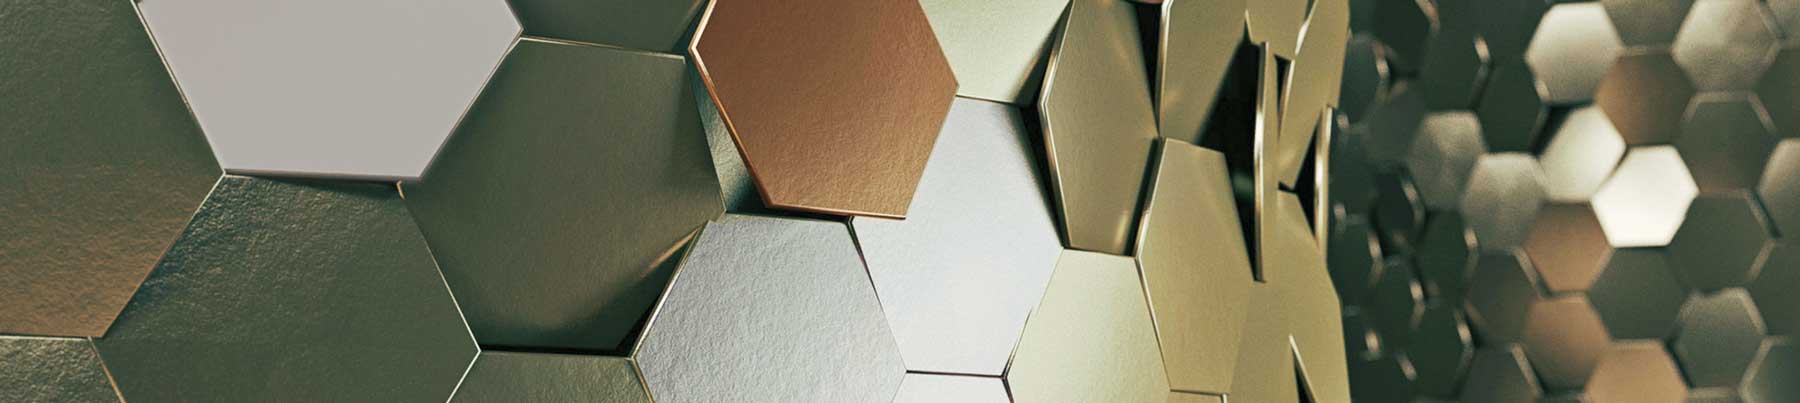 Hexagonal pattern of anodized aluminum tiles